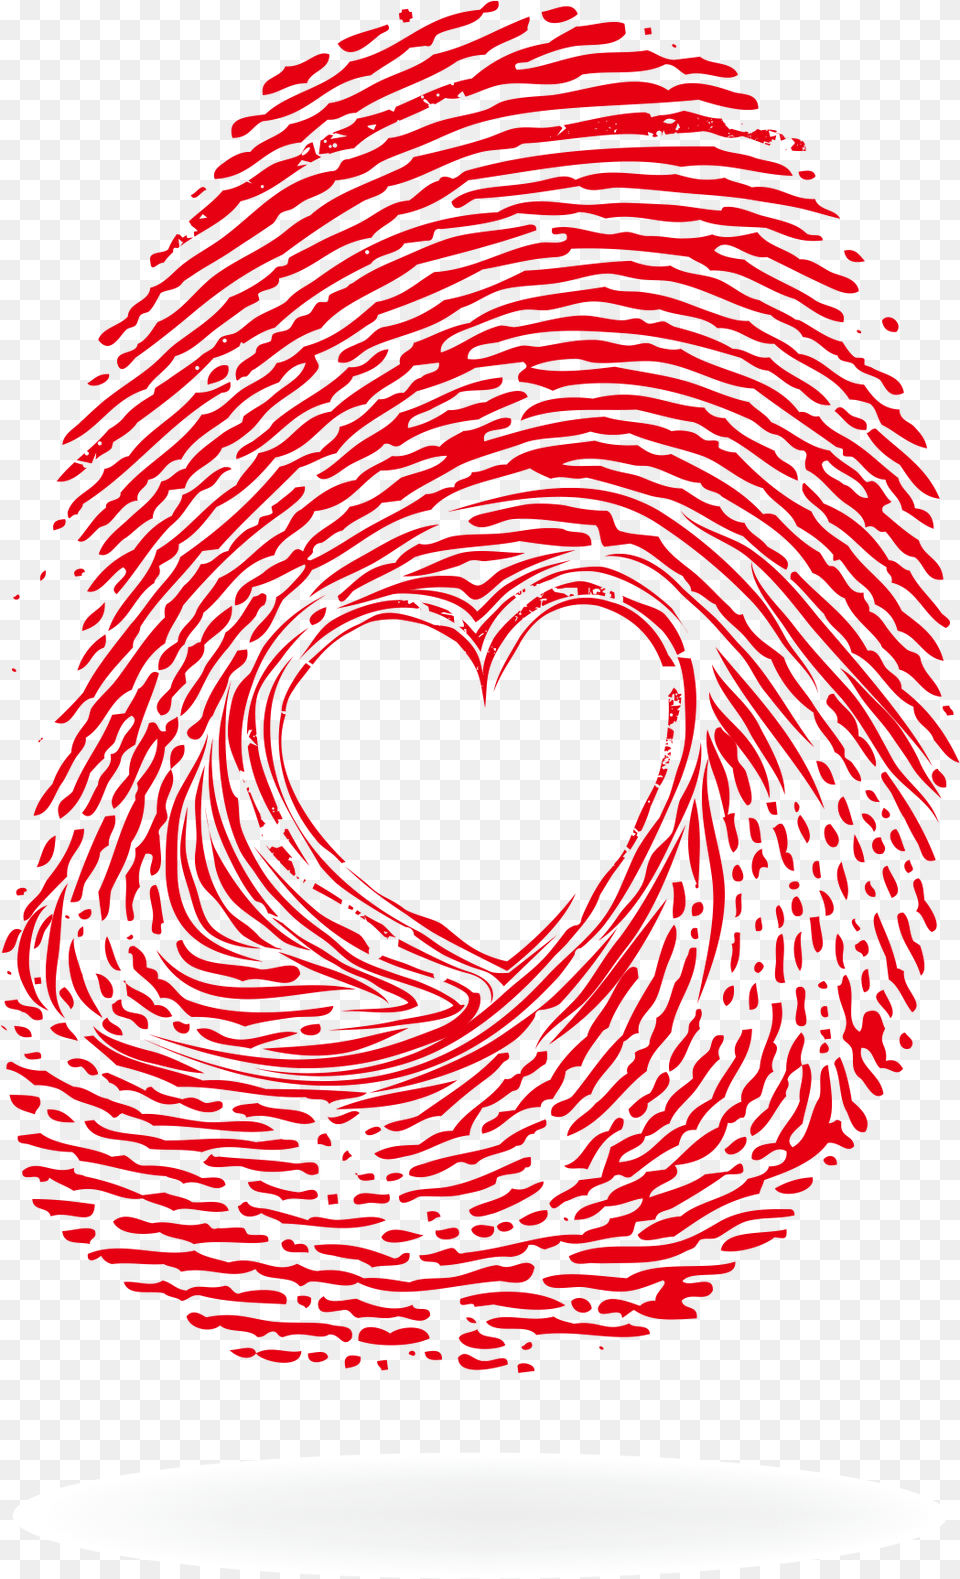 Heart Visual Design Elements And Principles Love Heart Fingerprint, Animal, Bird, Blade, Dagger Free Transparent Png